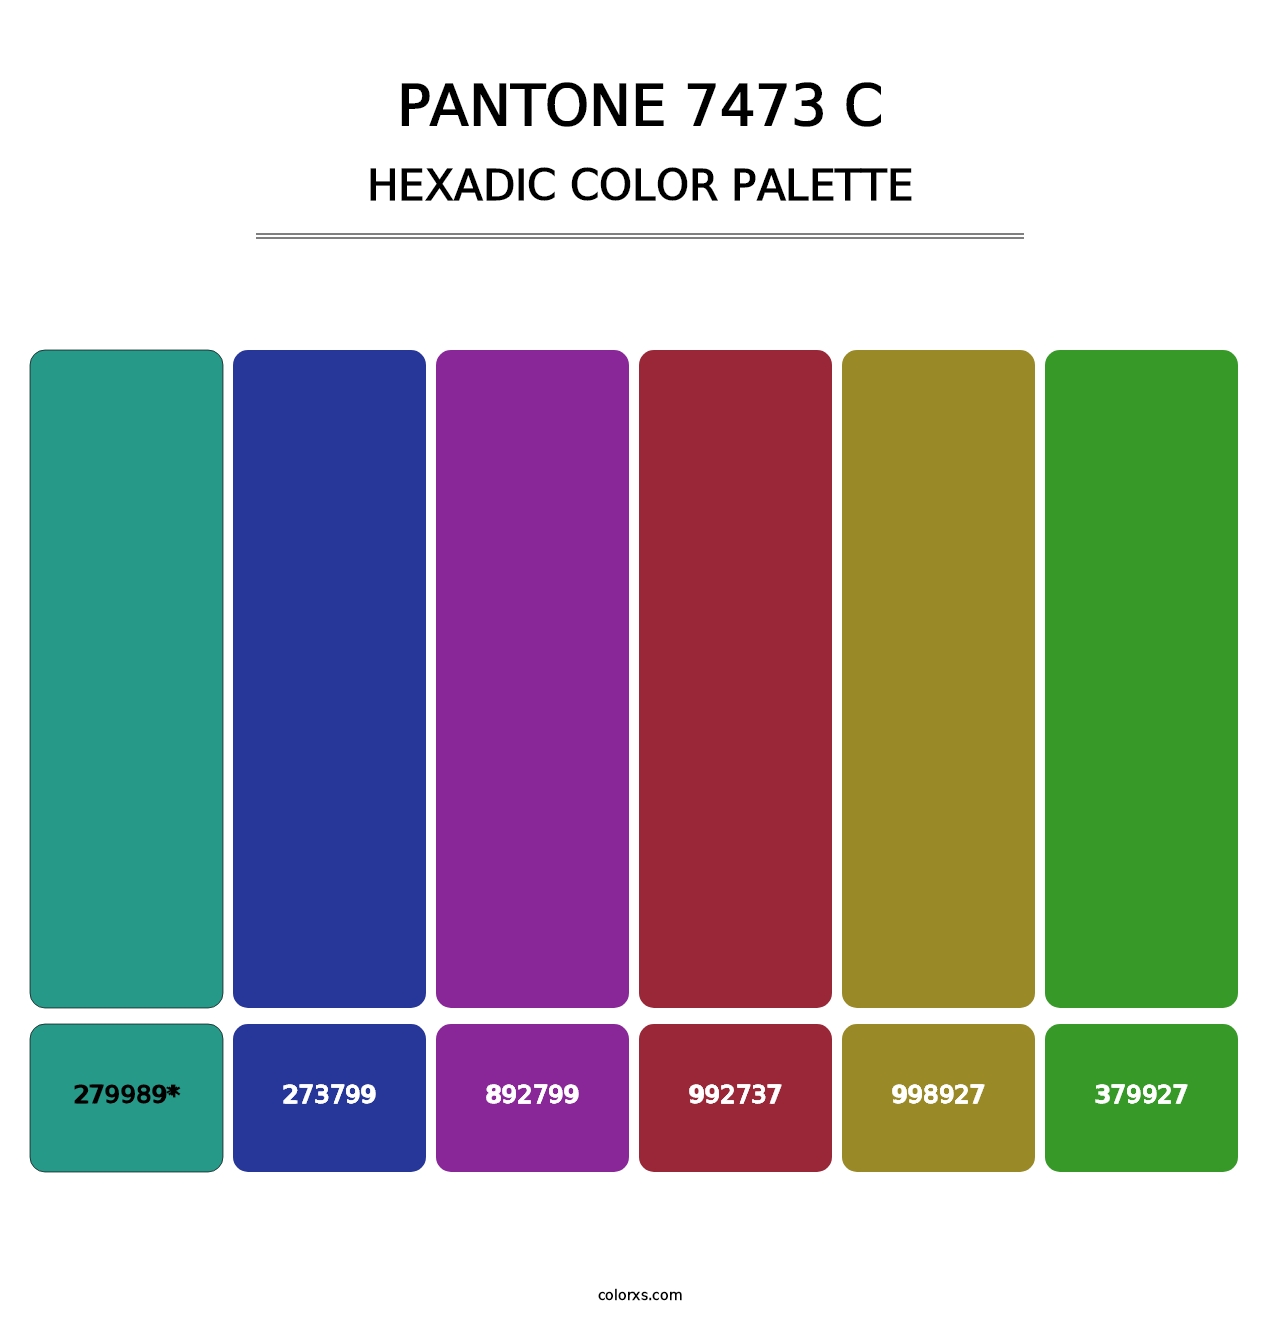 PANTONE 7473 C - Hexadic Color Palette